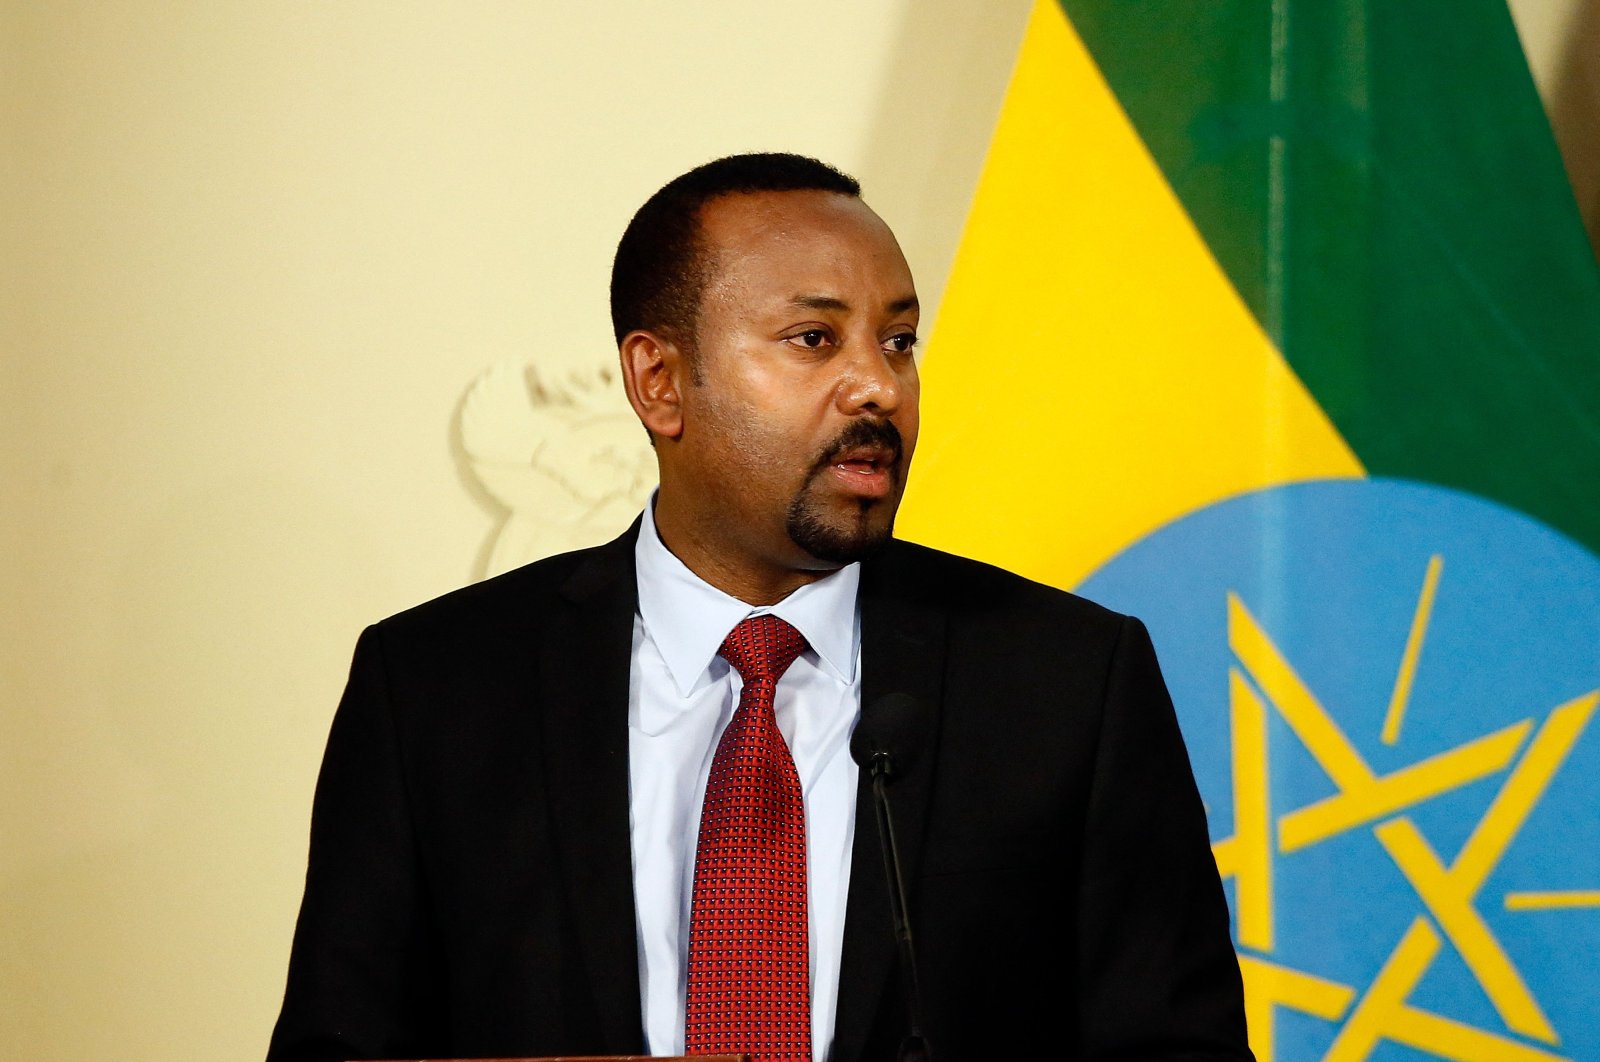 Prime Minister of Ethiopia Abiy Ahmed Ali